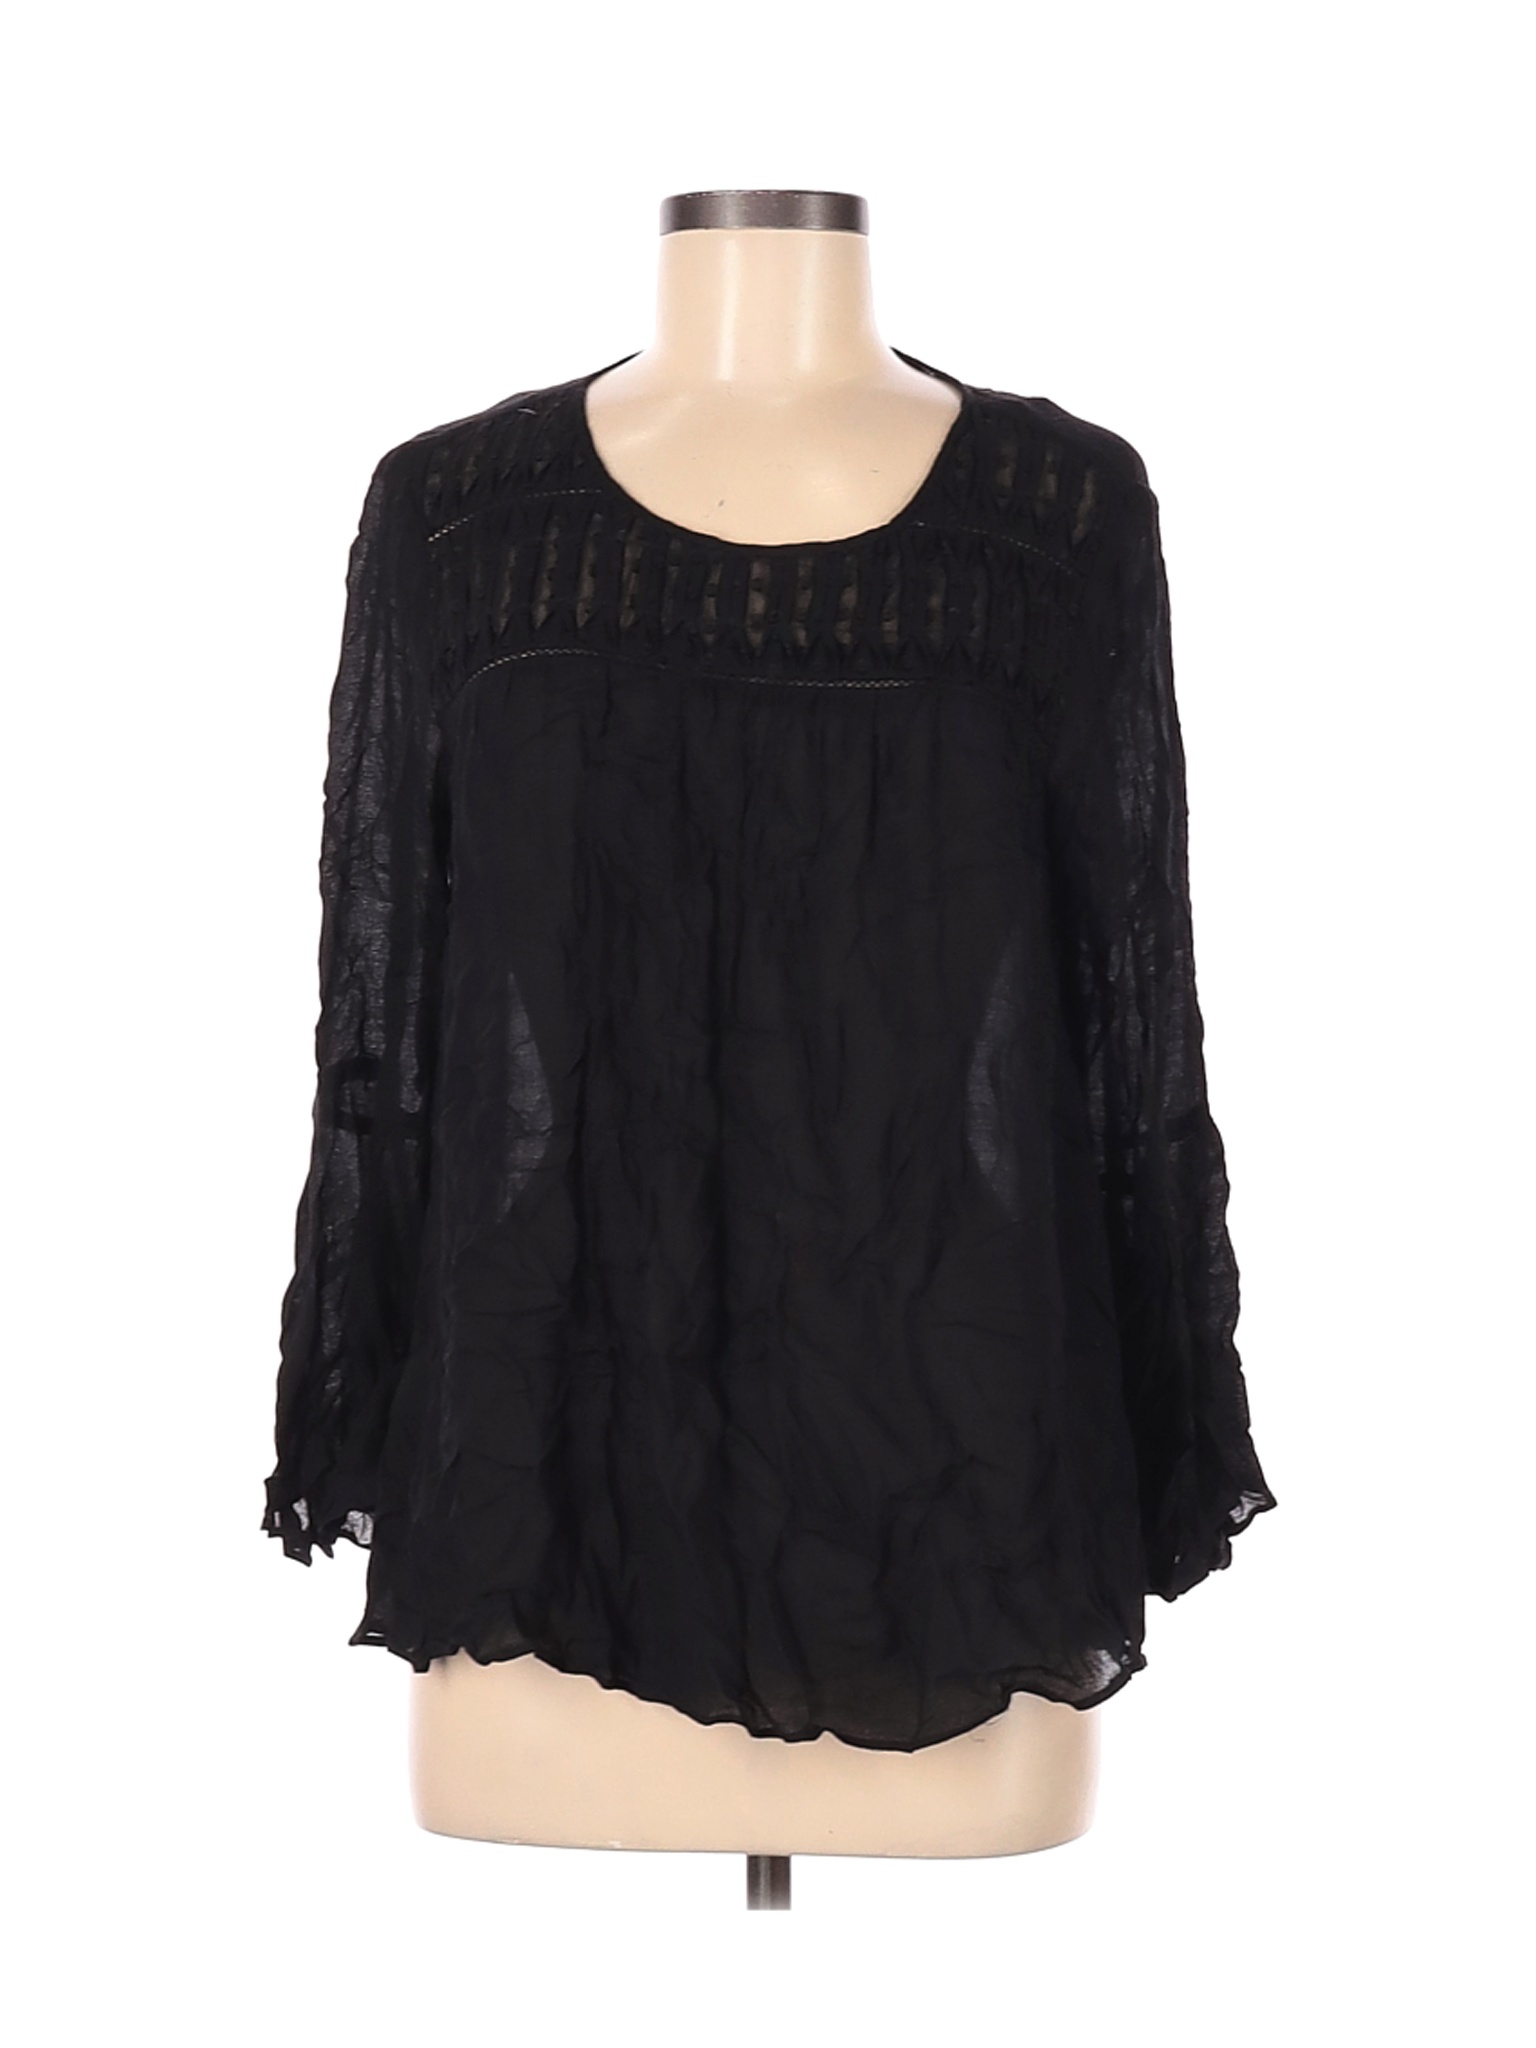 Jessica Simpson Women Black Long Sleeve Blouse M | eBay